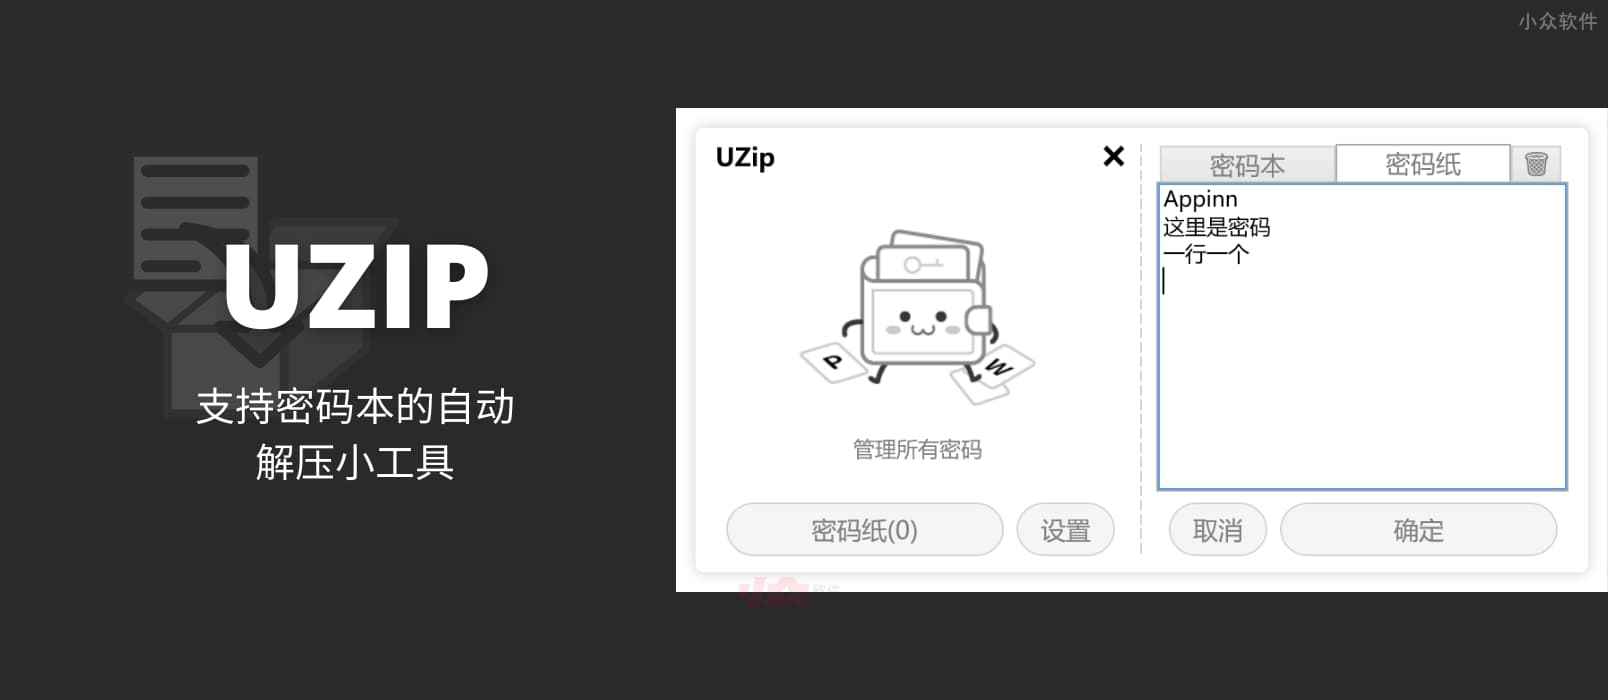 UZIP – 支持密码本，多密码自动解压缩加密文件[Windows]